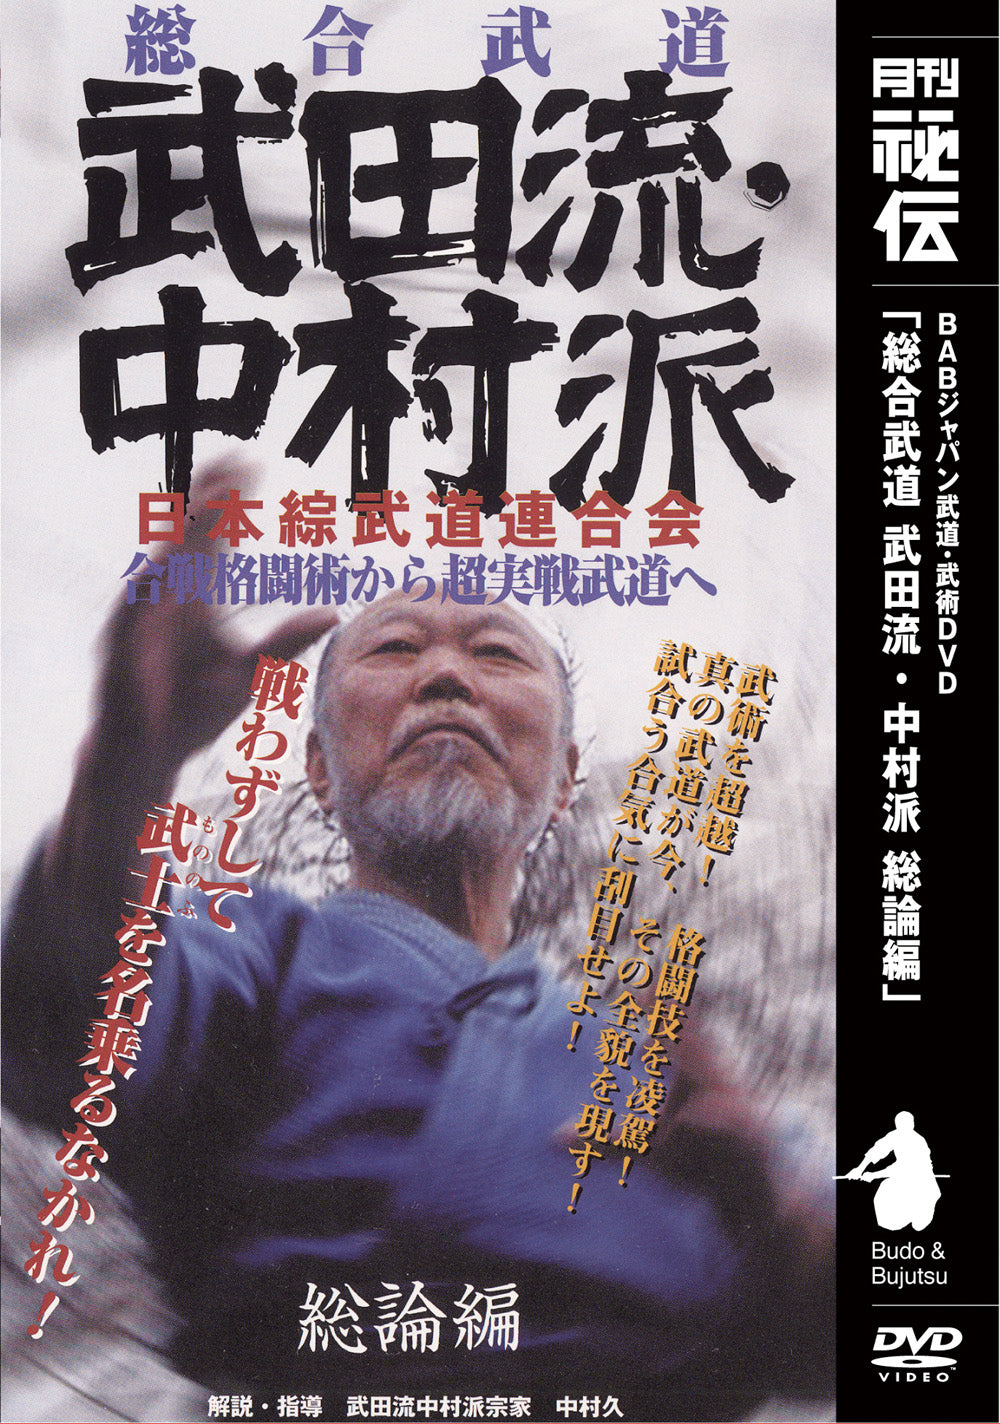 Nakamura Ha Takeda Ryu DVD Vol 1 with Hisashi Nakamura